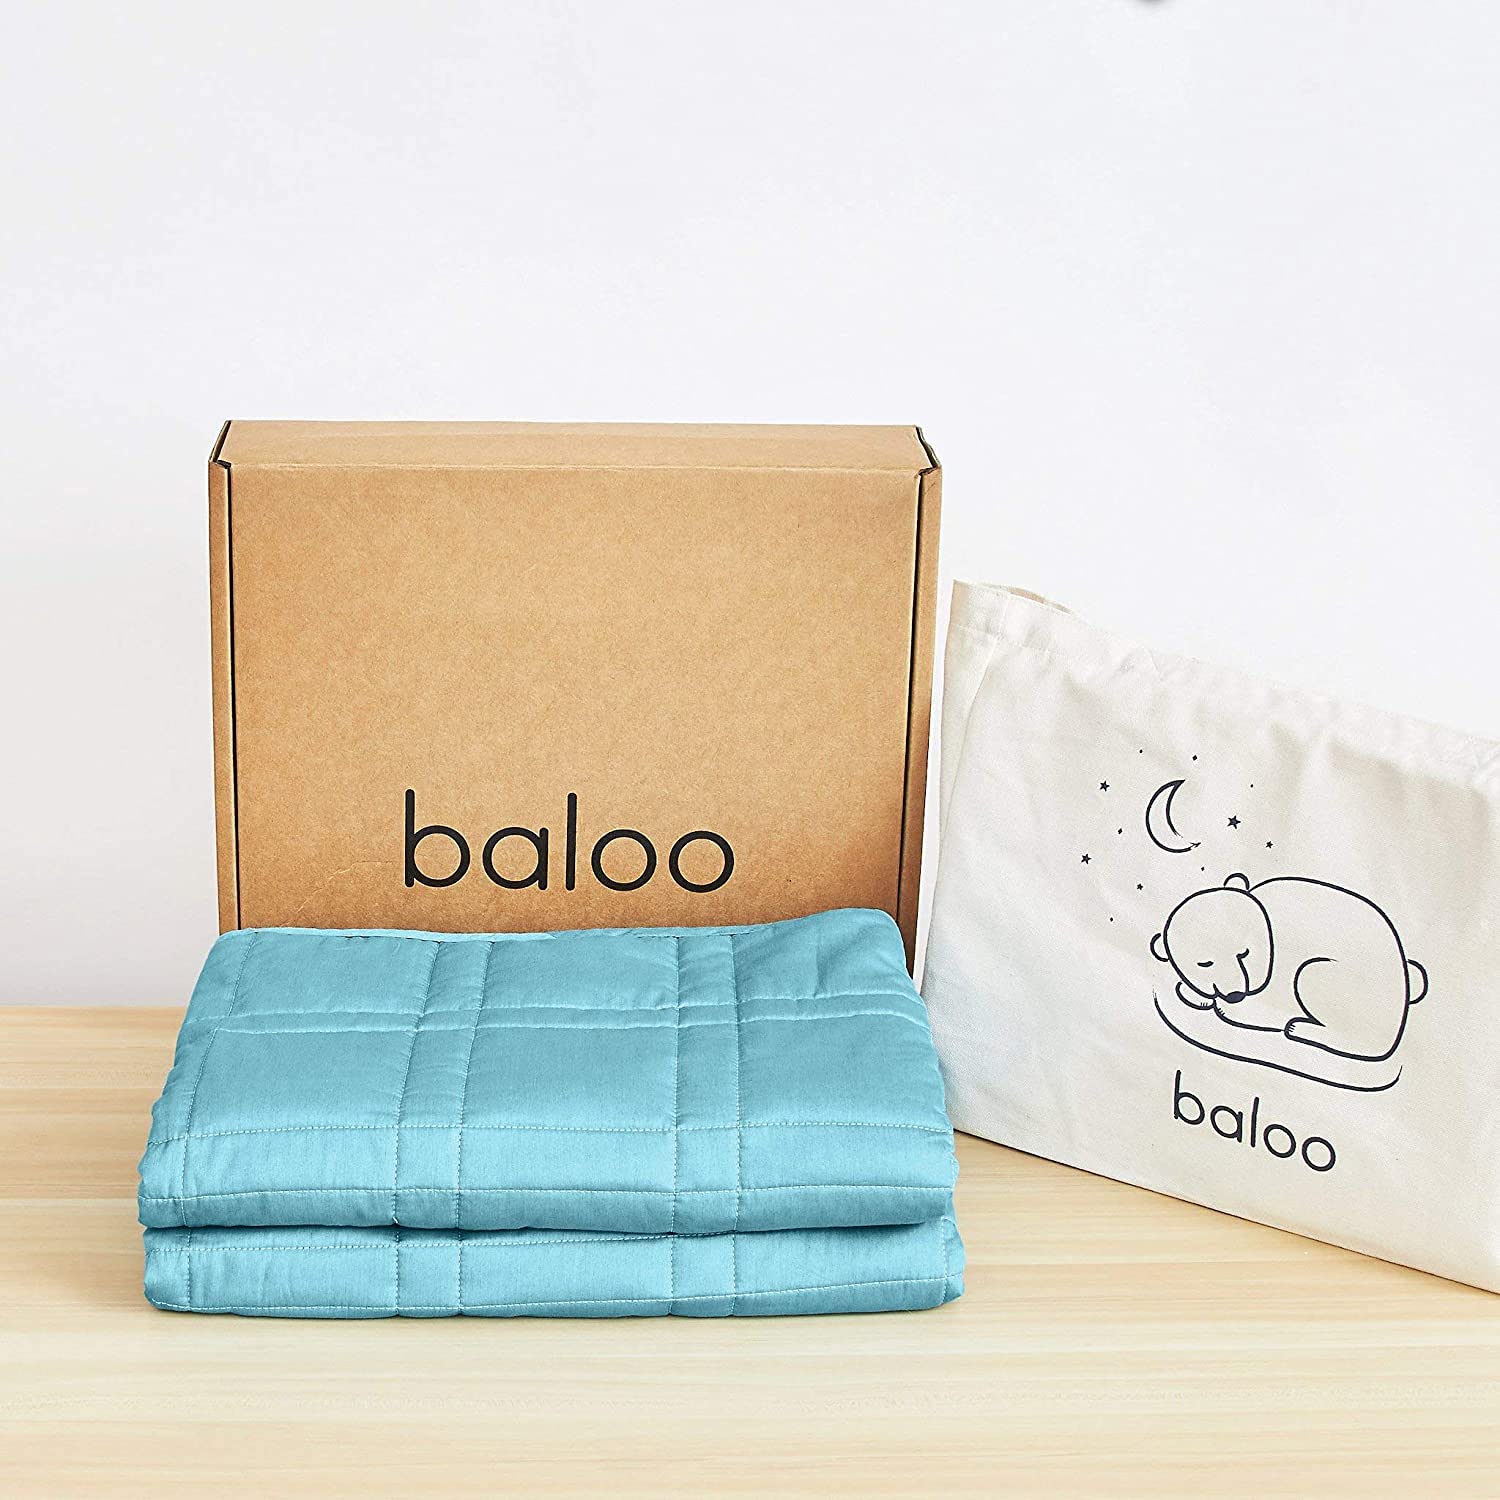 Baloo 9lb Weighted B>